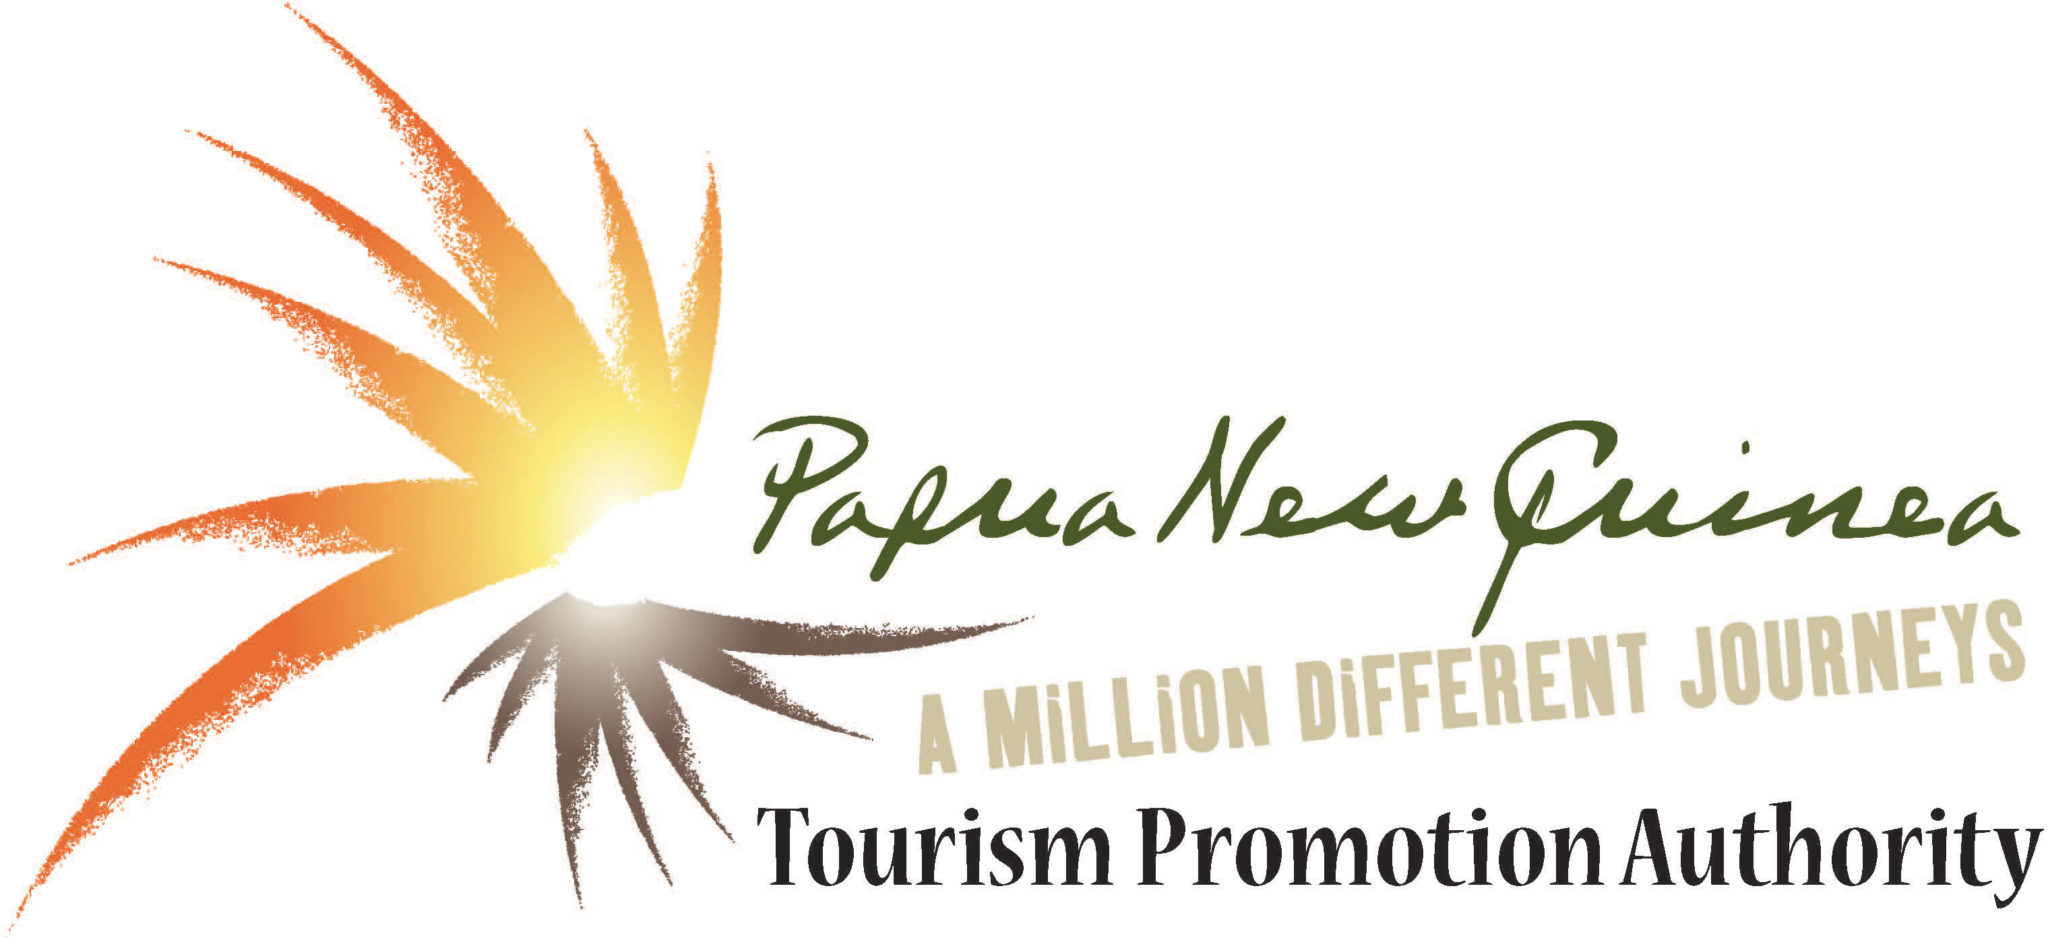 tourism promotion authority